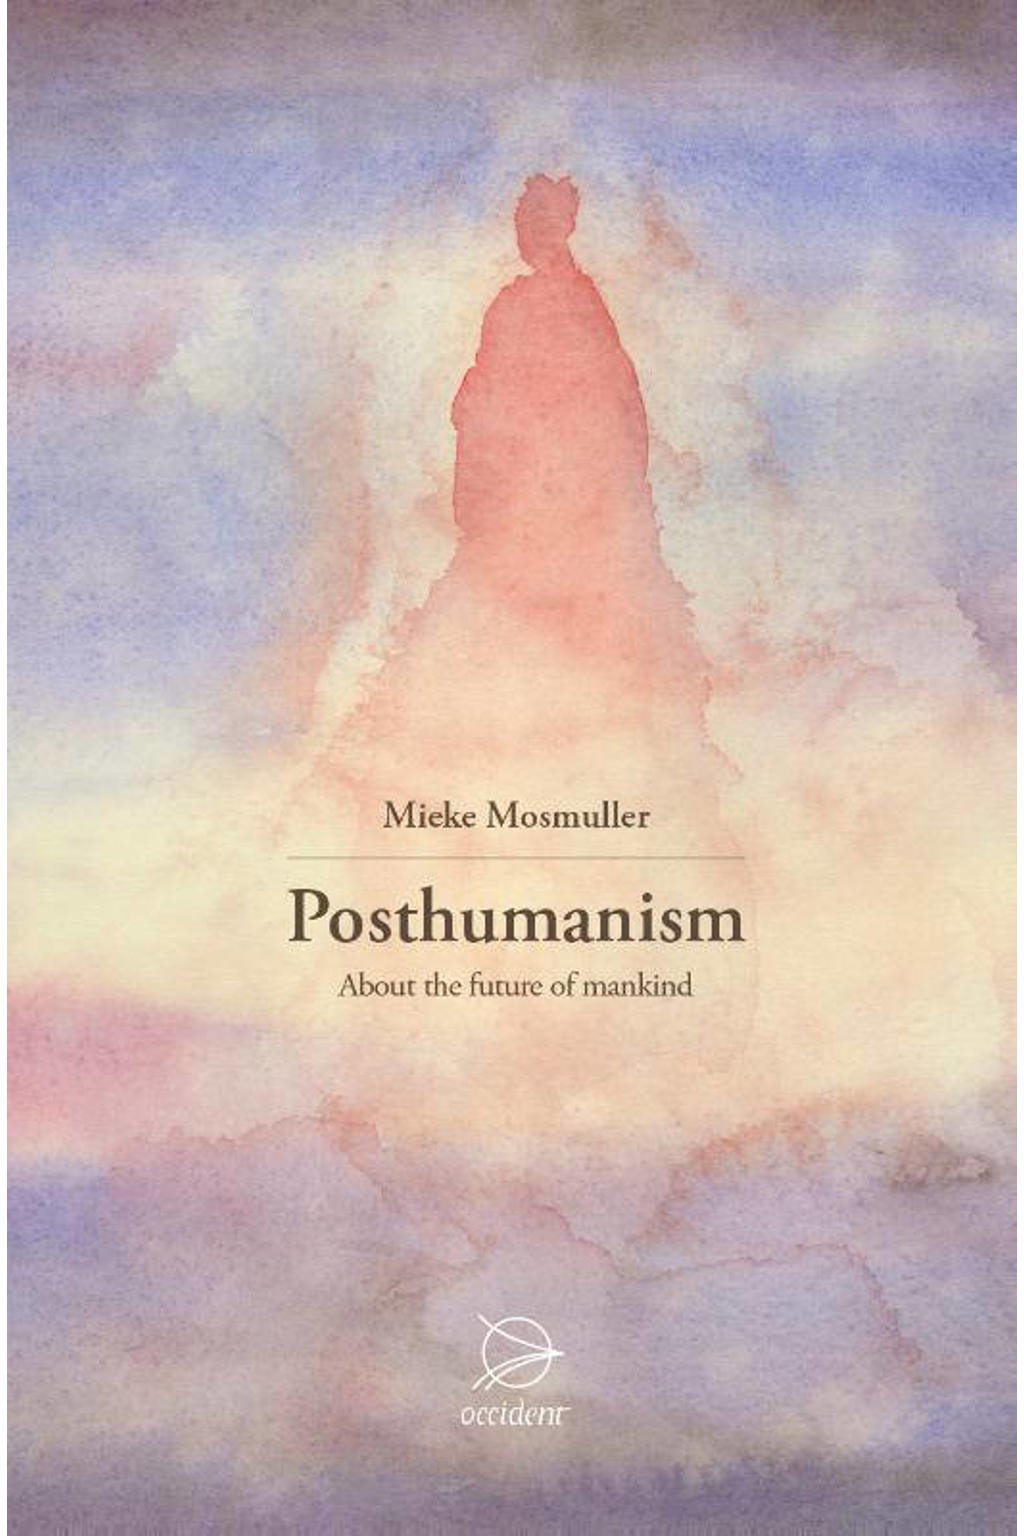 Posthumanism - Mieke Mosmuller